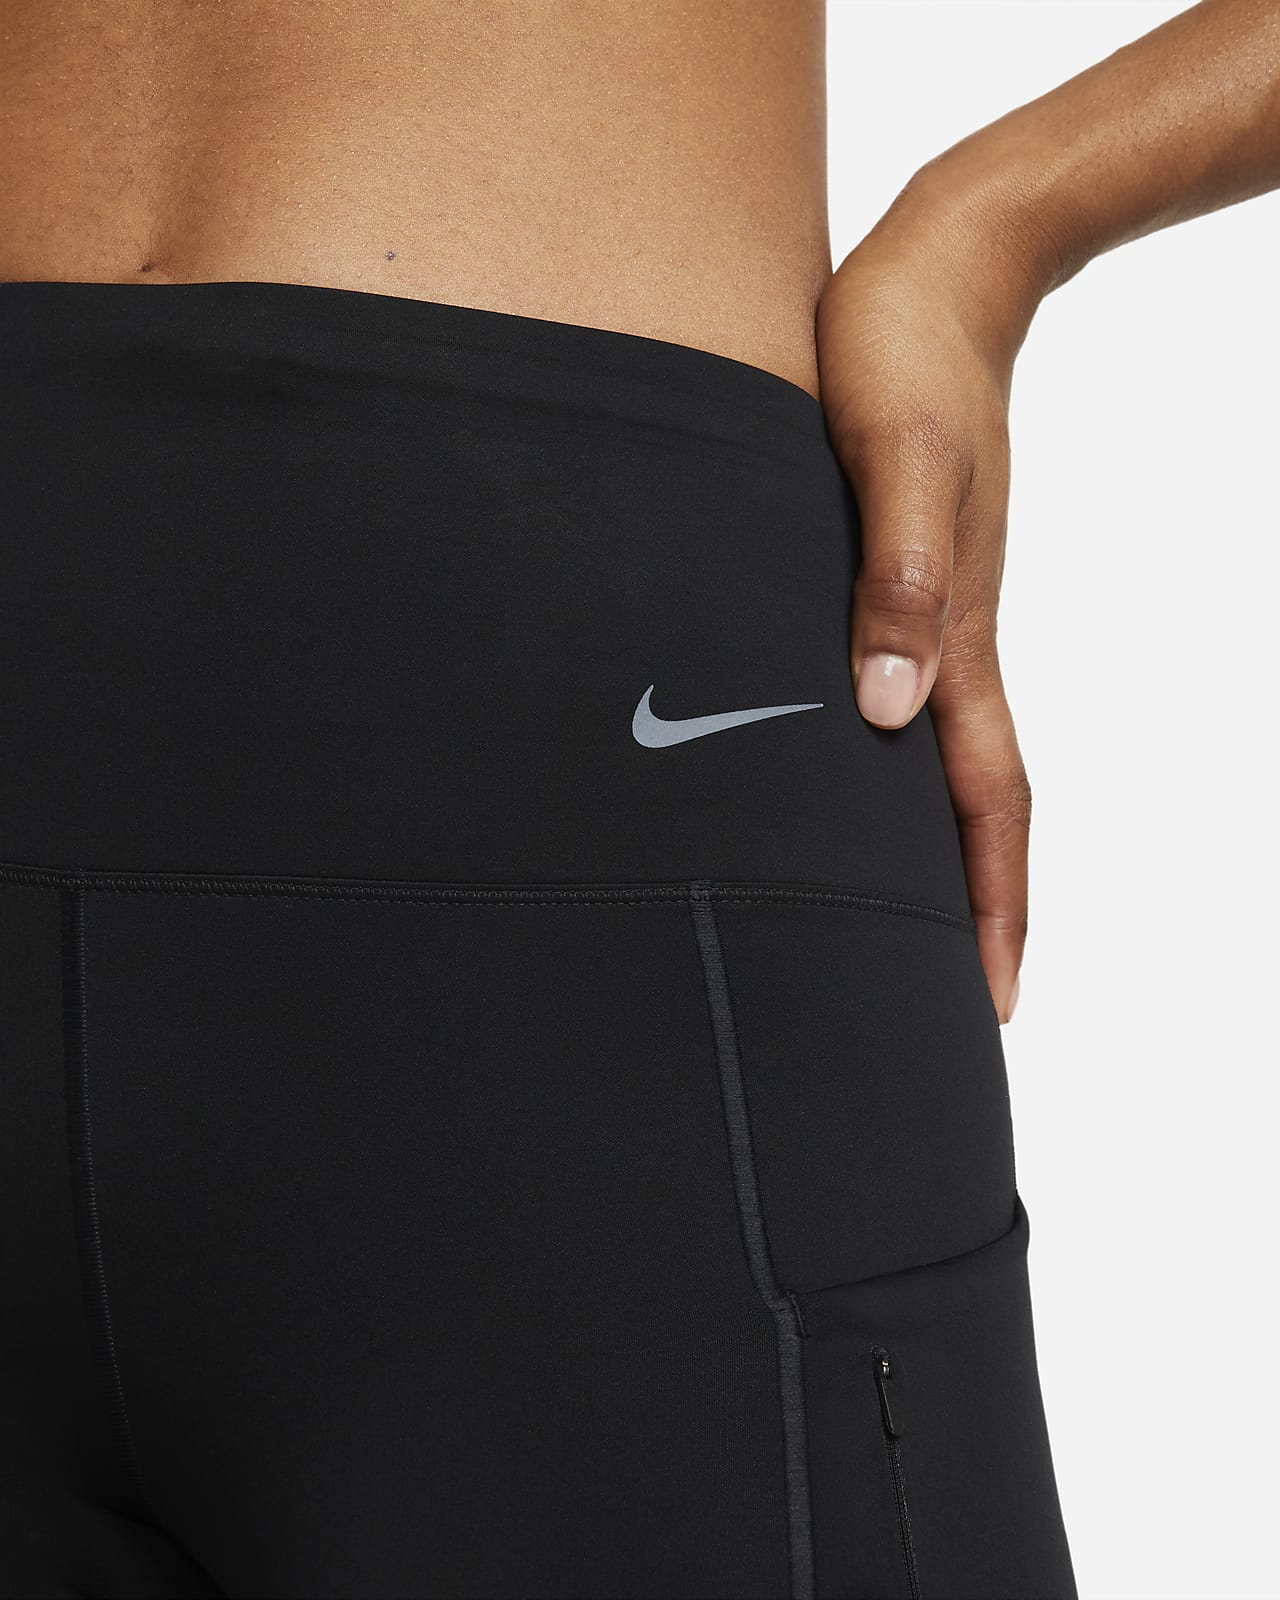 Nike Performance GO SHORT - Leggings - mantra orange/(black